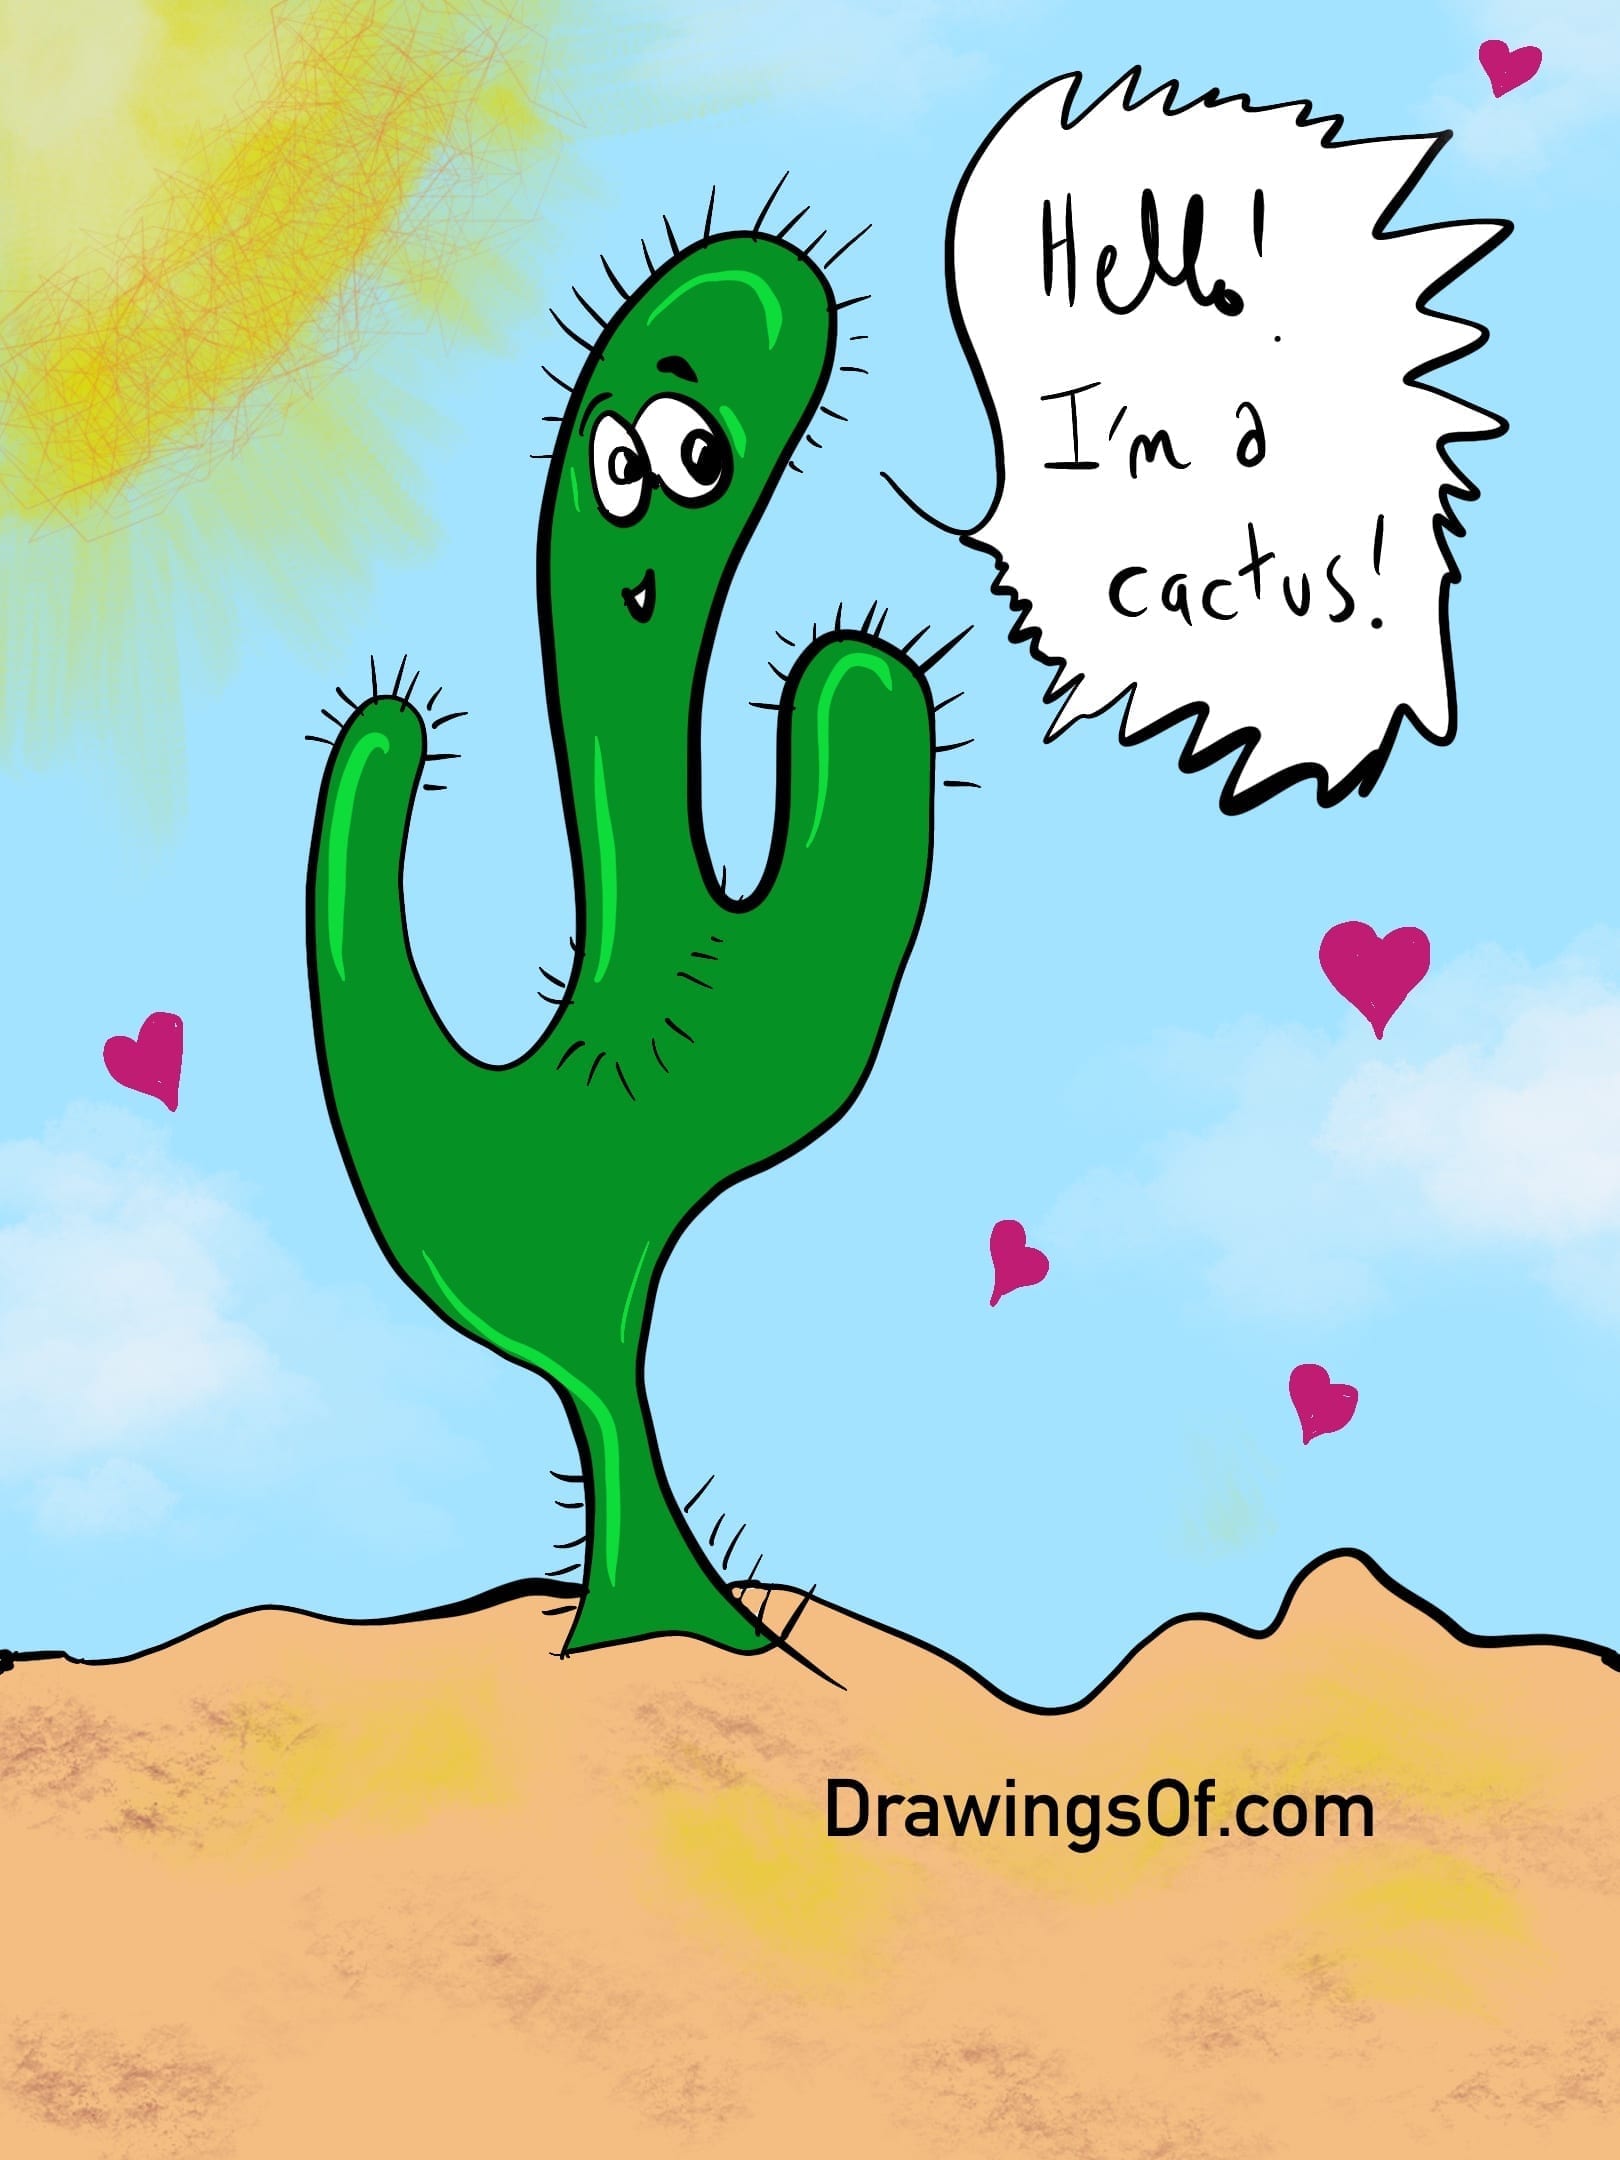 Cactus cartoon, funny and cute